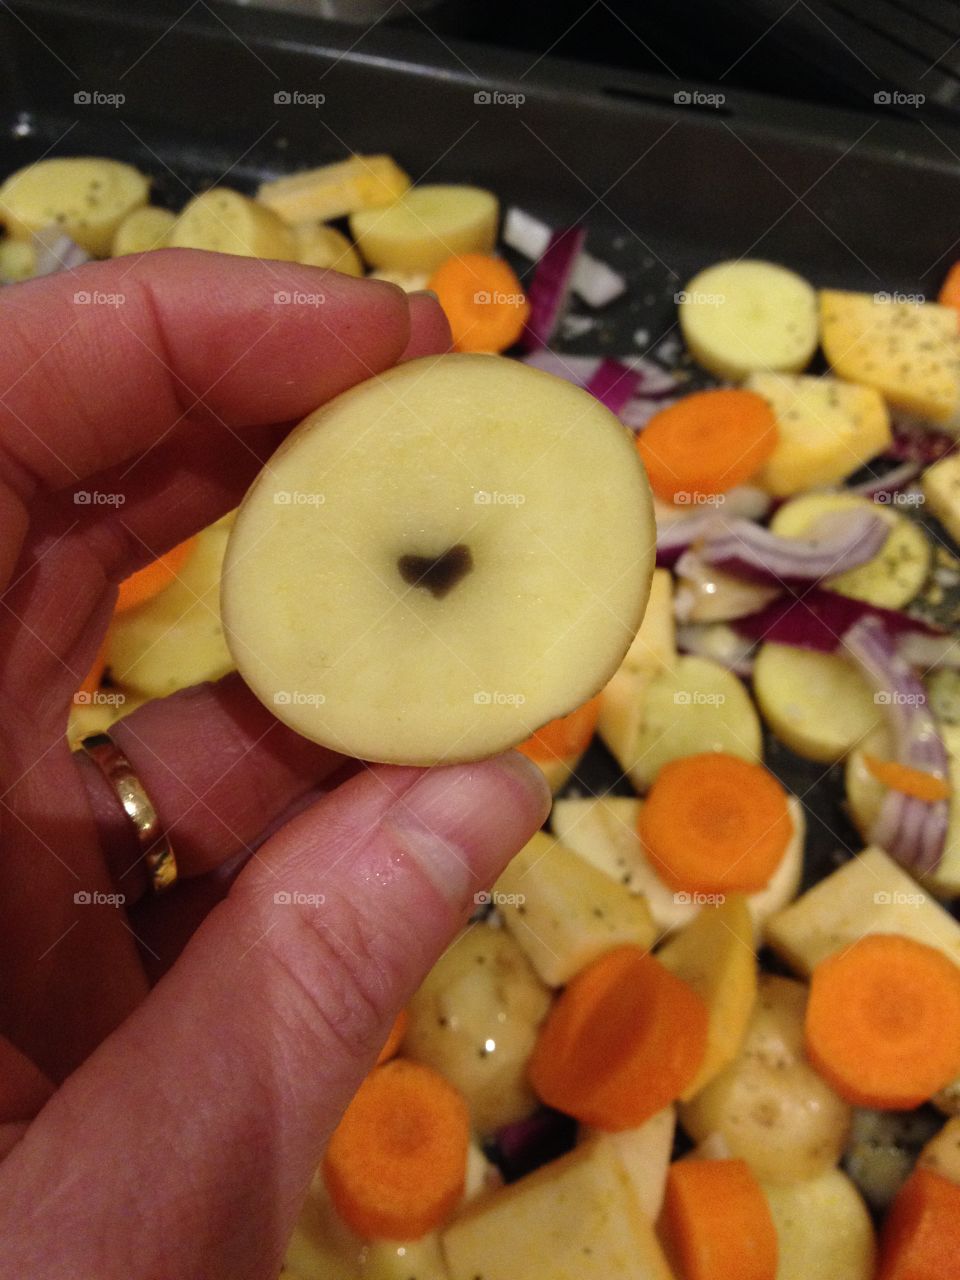 Heart in a potato